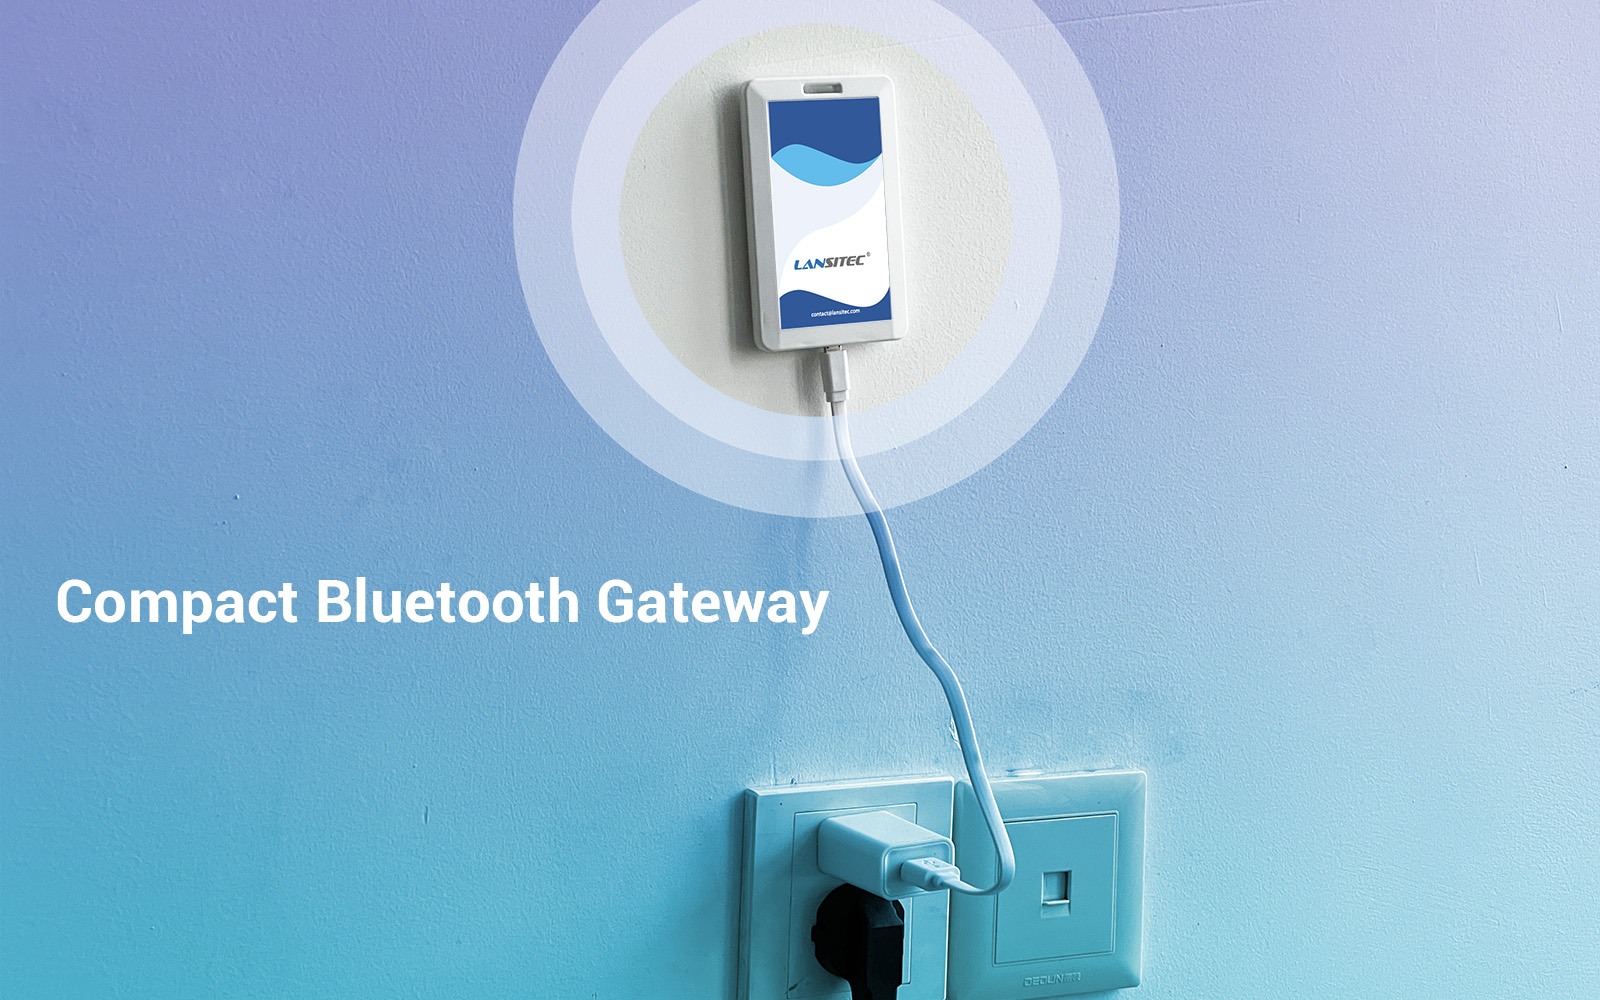 Compact Bluetooth Gateway